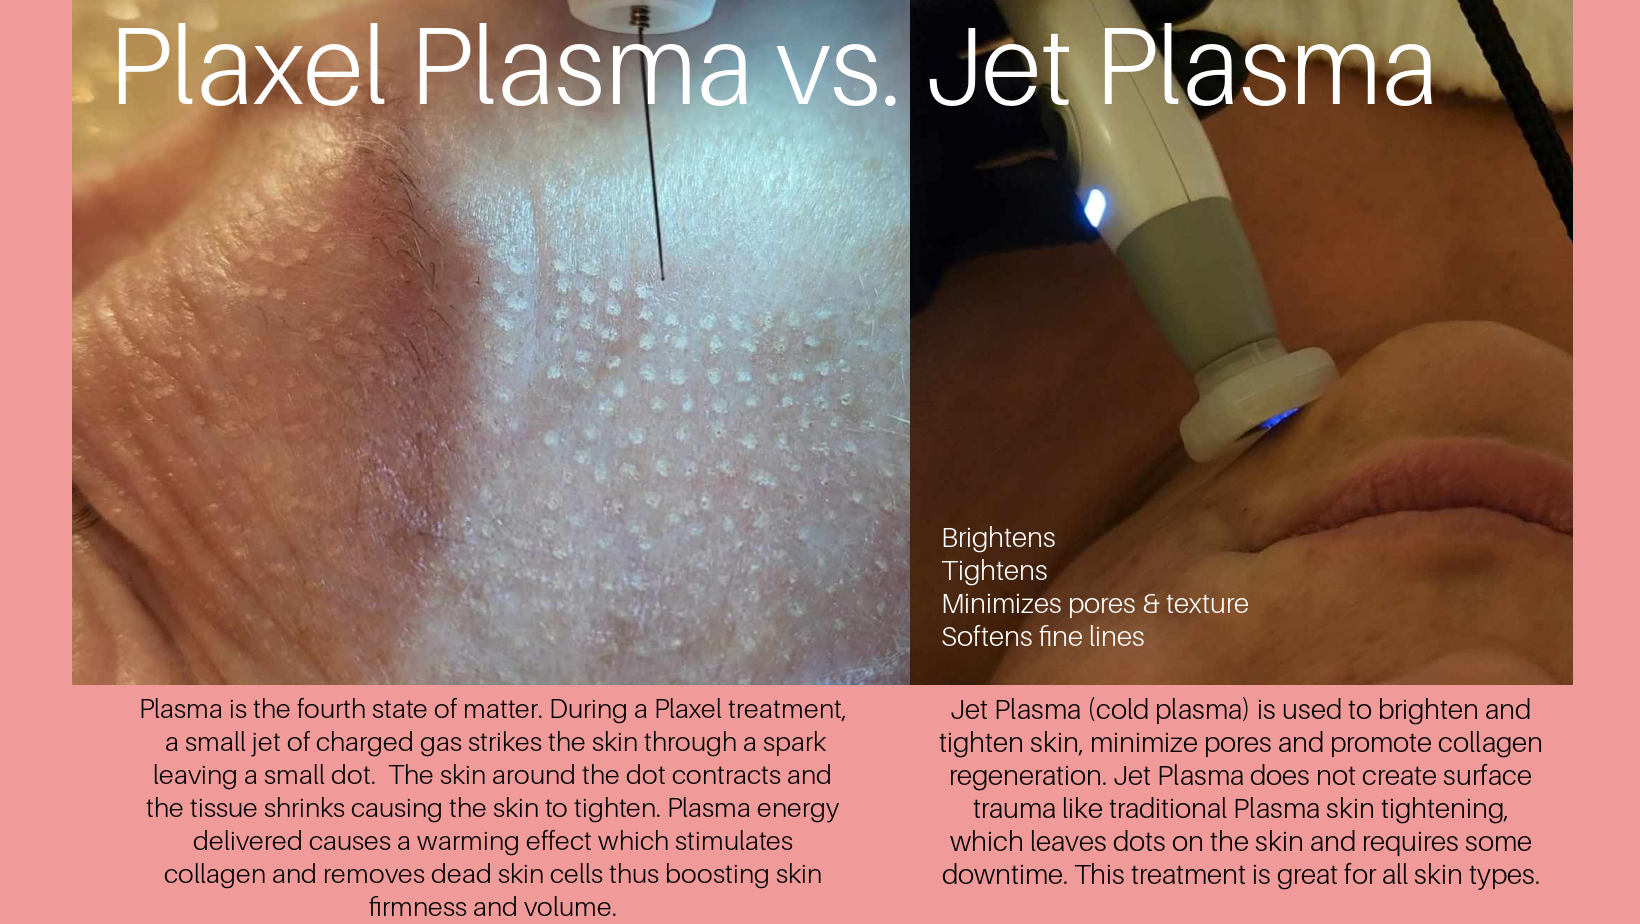 Jet, plasma, wrinkle reducing, eliminate wrinkles, fine lines, age spots